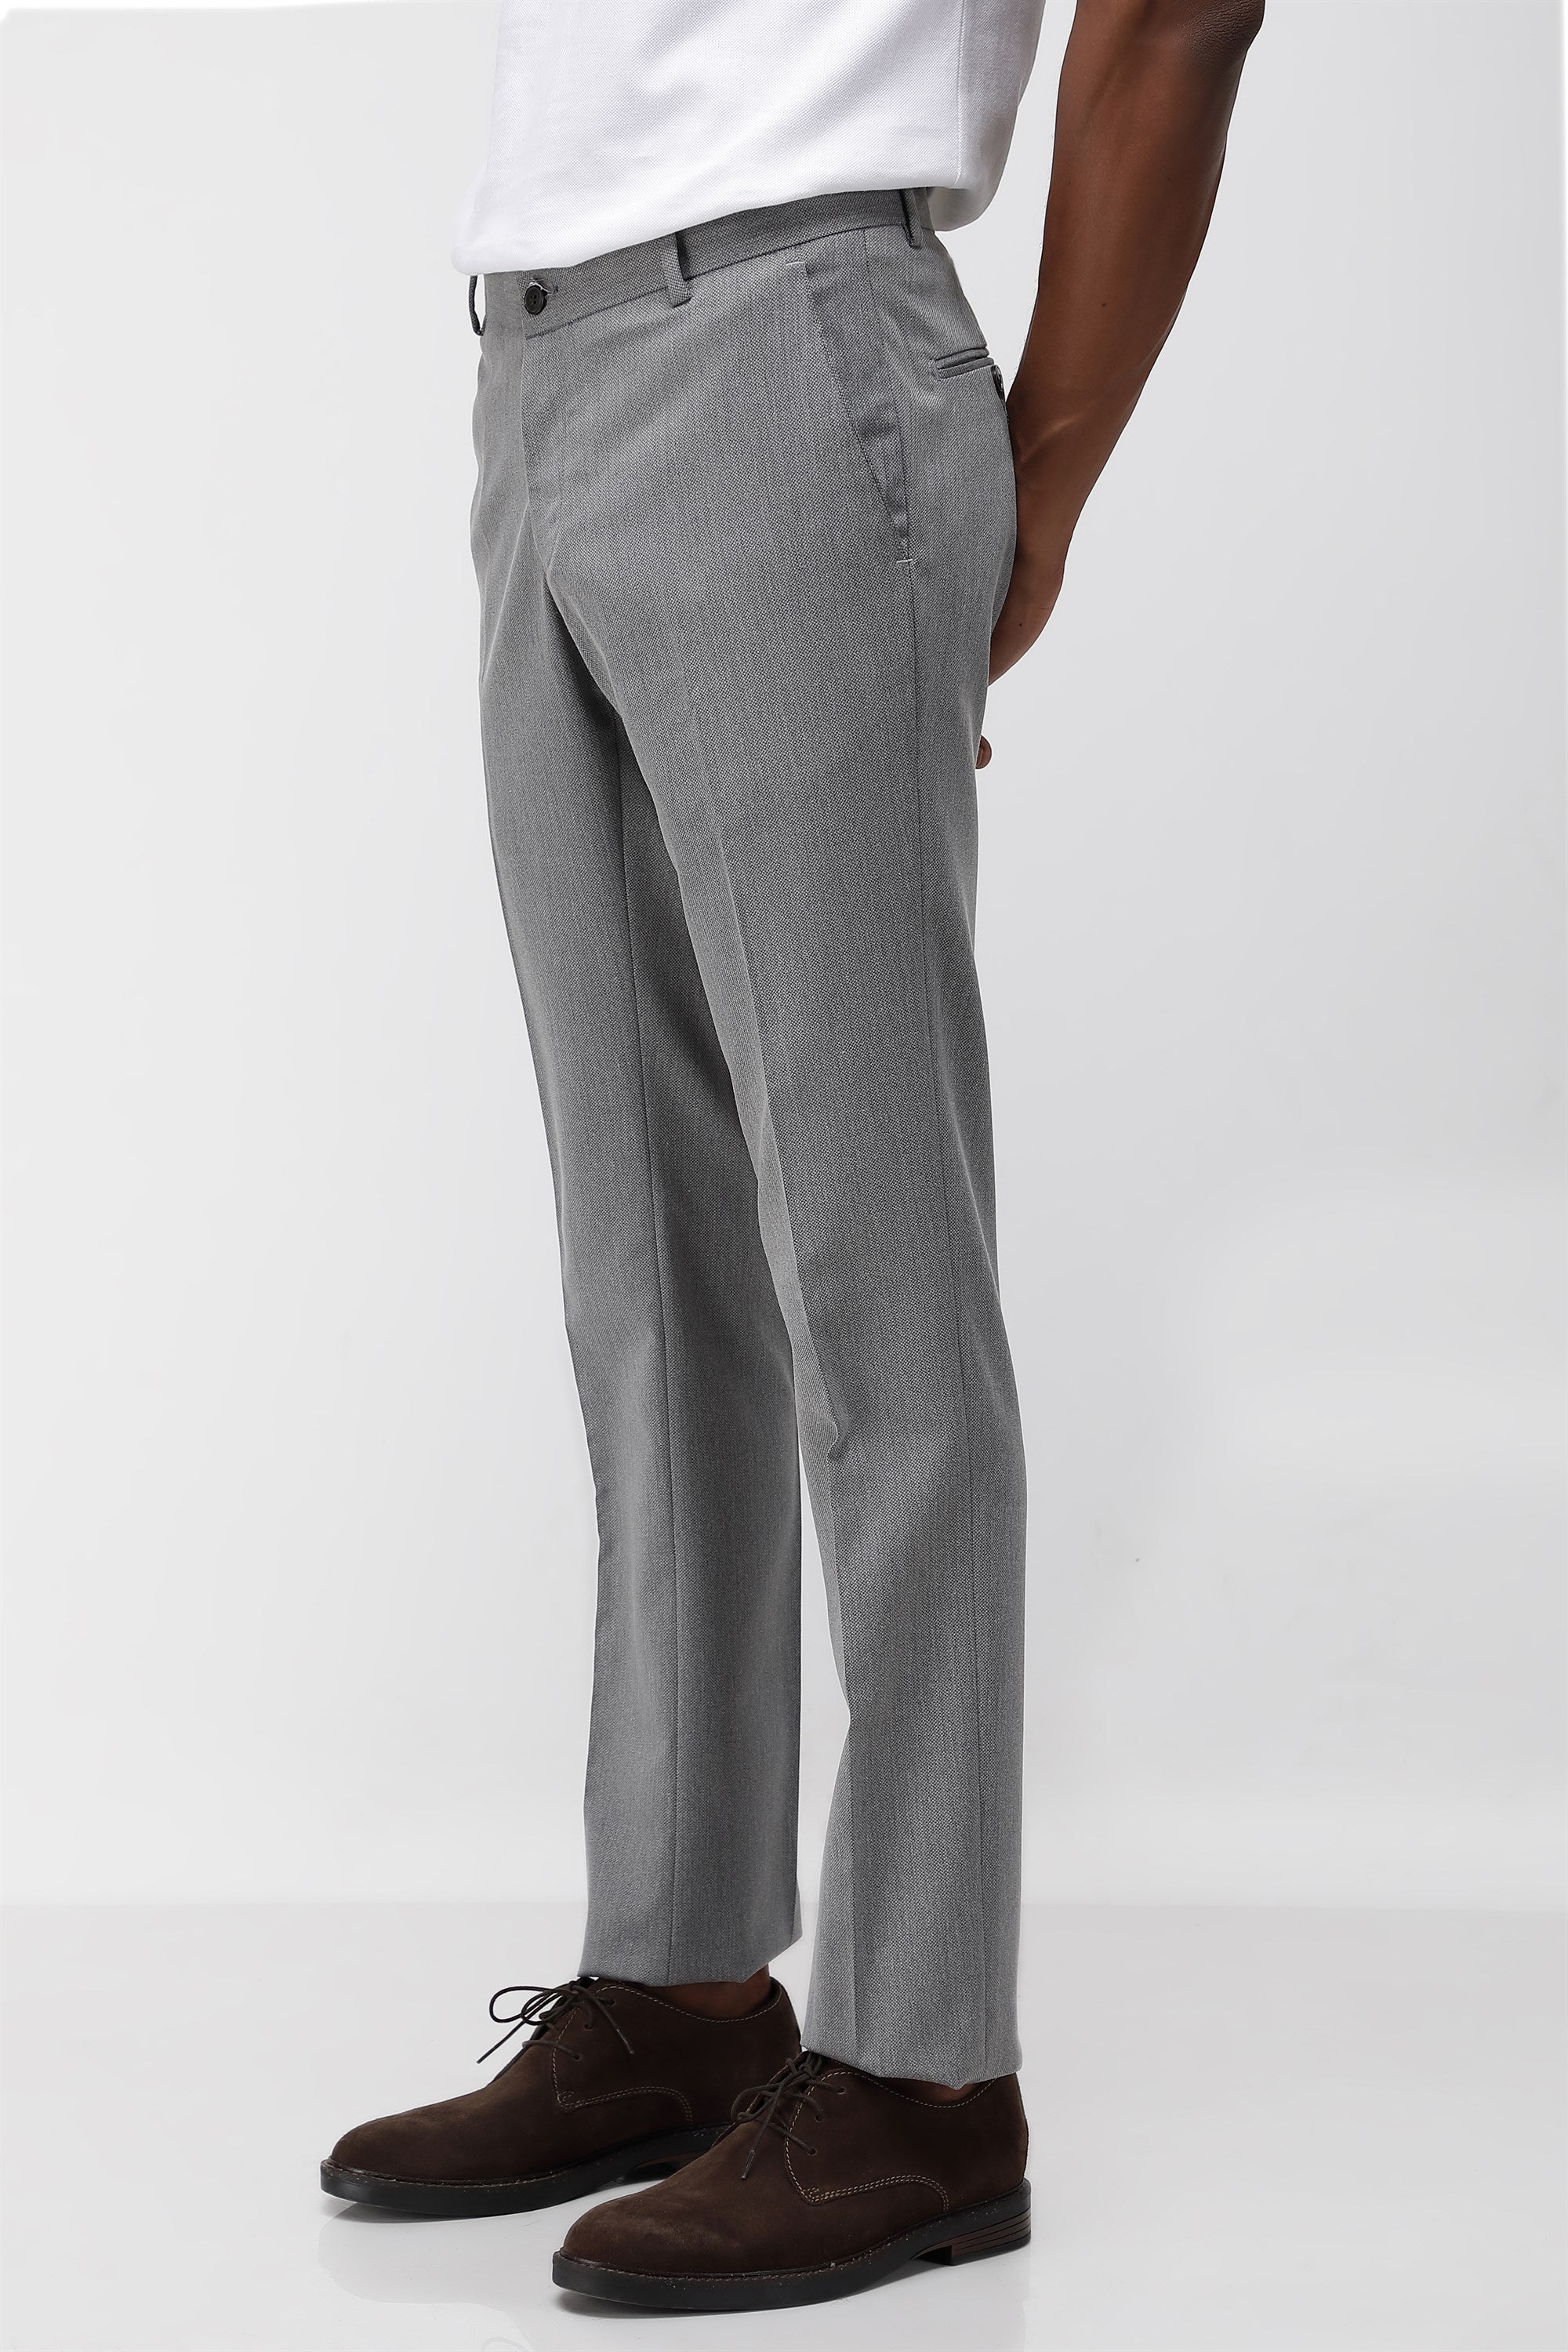 2016 Fashion Skinny Chino Brand Name Men Formal Pants Designs  China Formal  Pants and Formal Skinny Pants price  MadeinChinacom